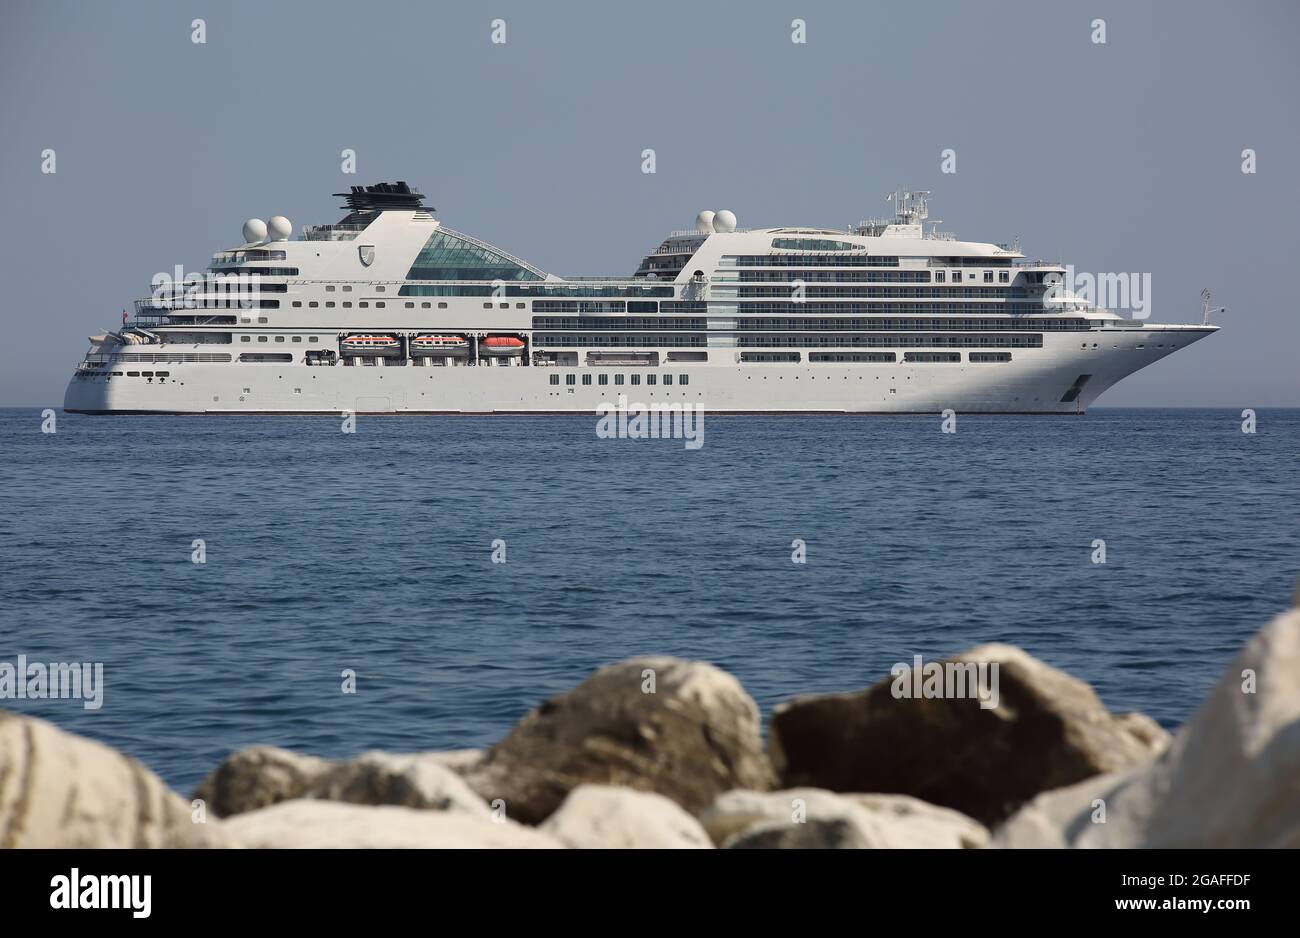 Luxury cruise ship on Mediterranean sea seen from behind rocky beach Stock Photo